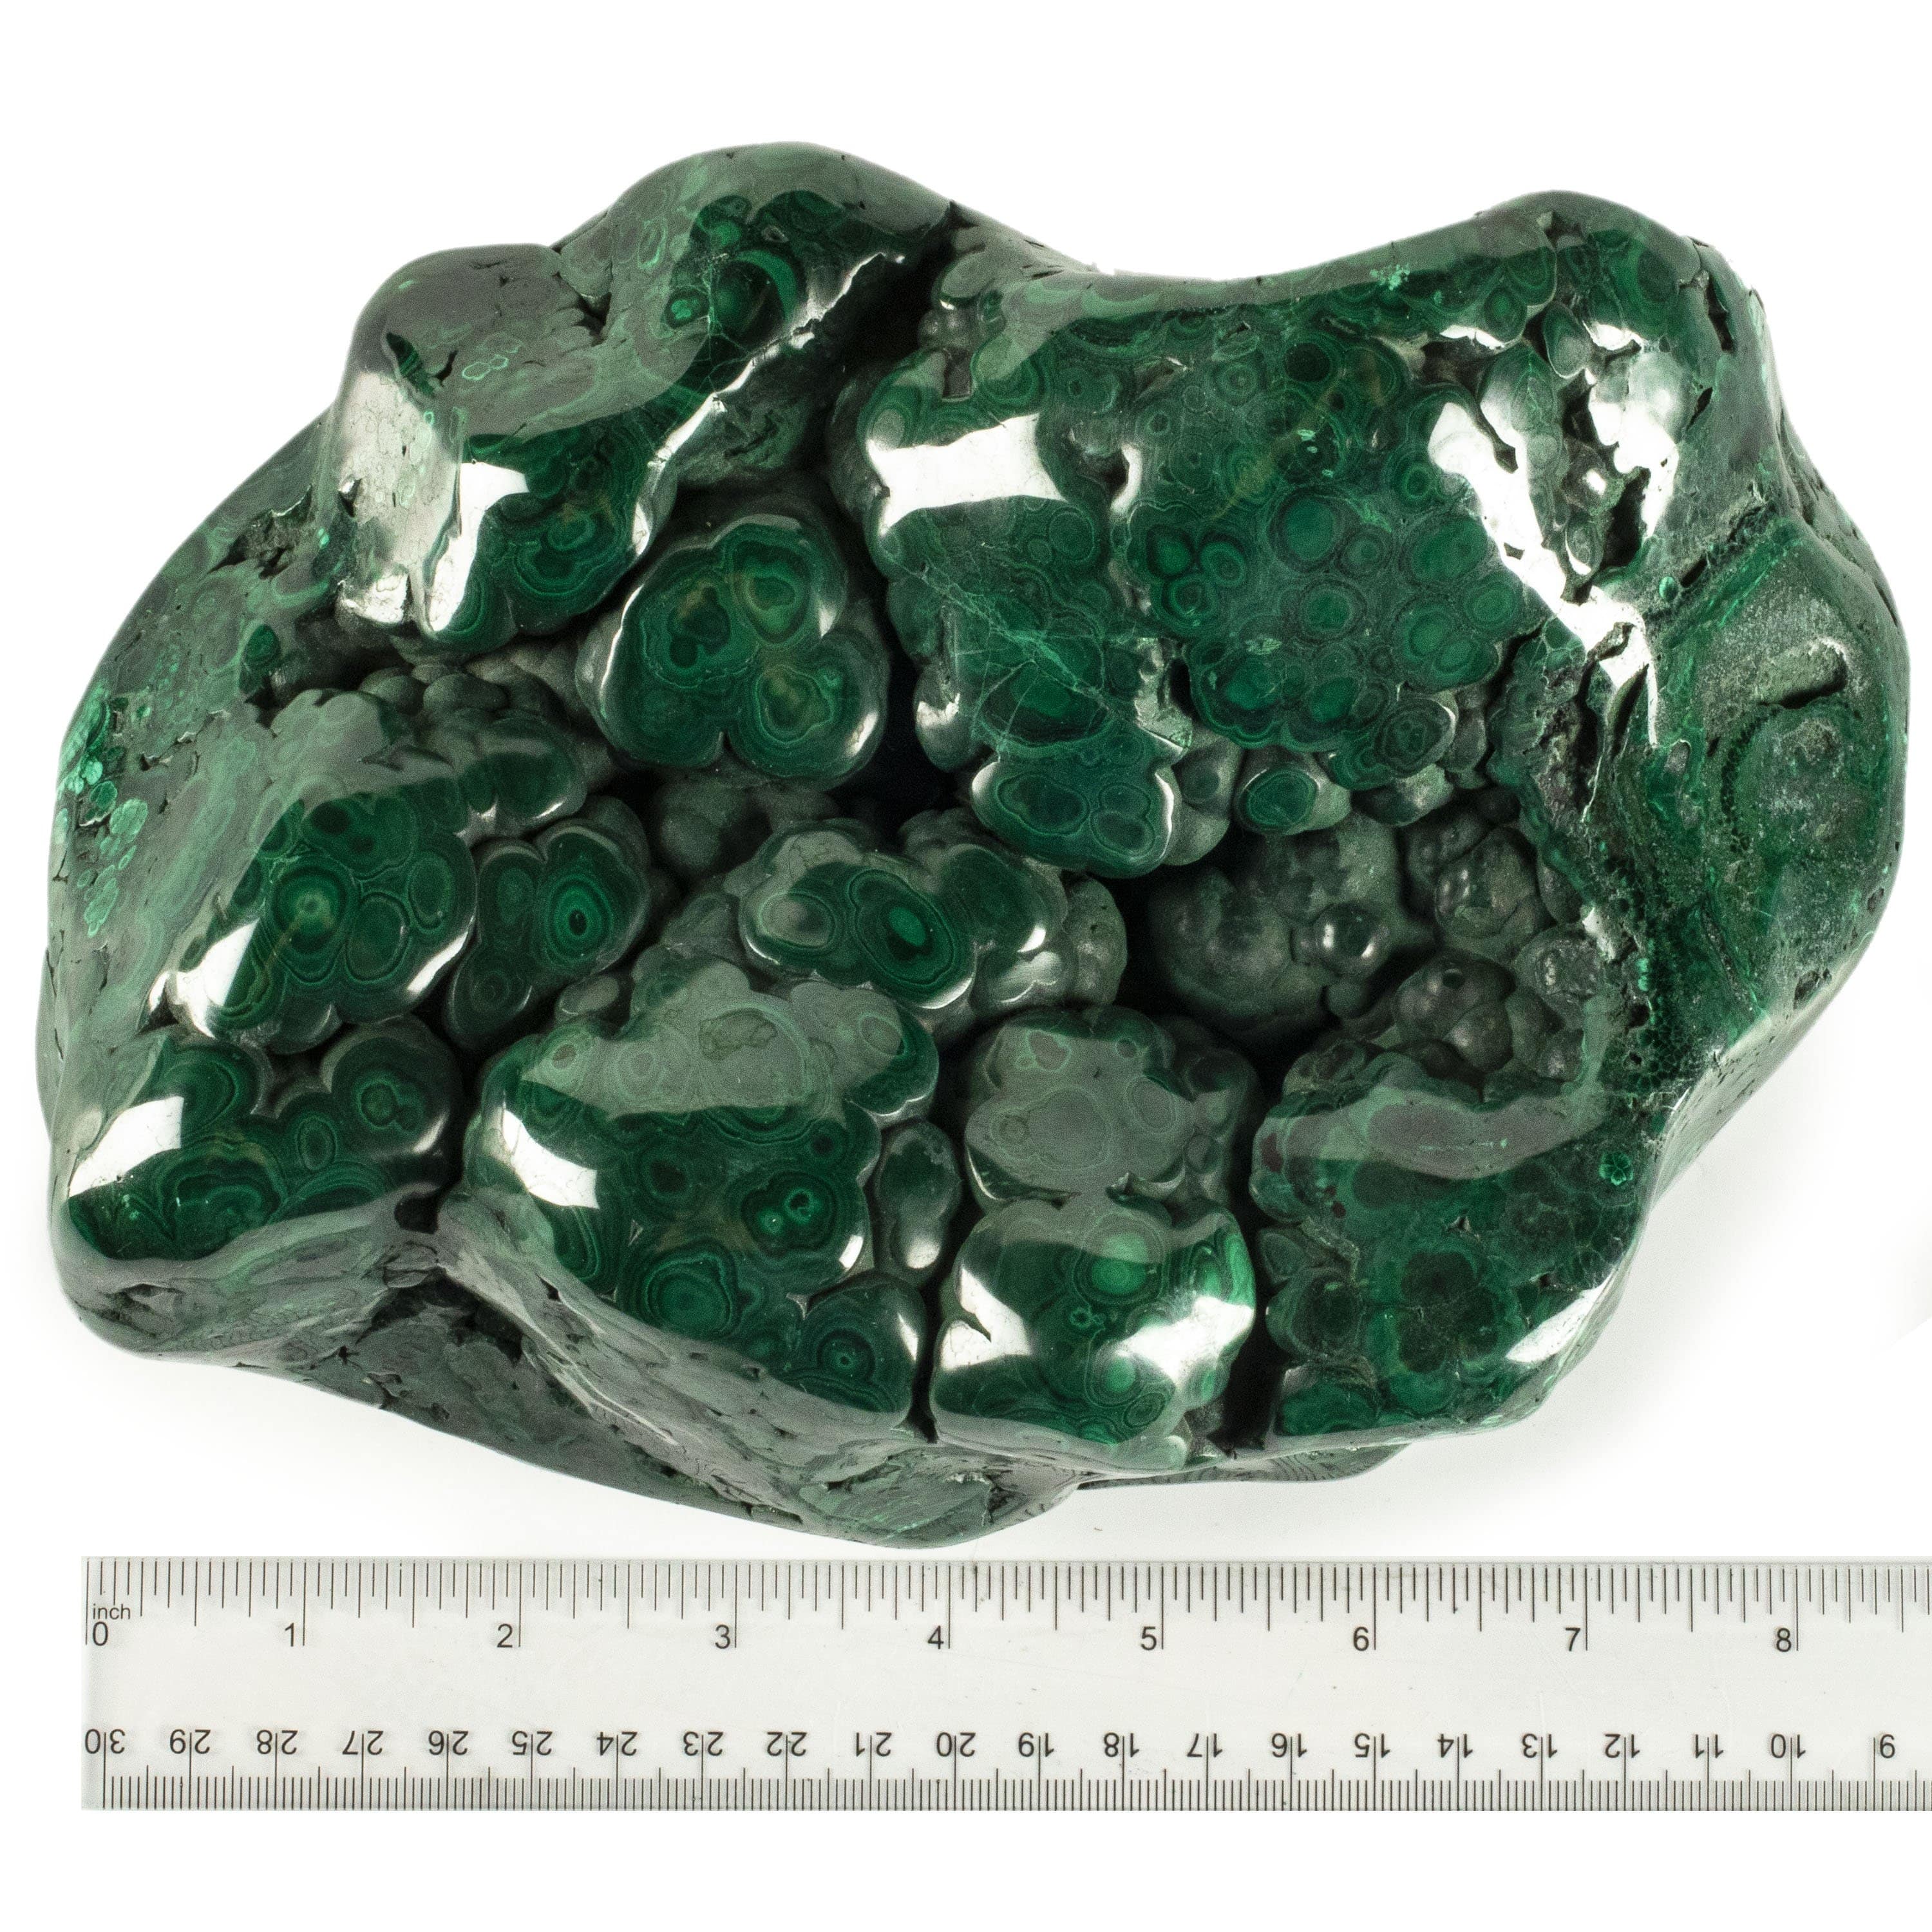 Kalifano Malachite Rare Natural Green Malachite Polished Freeform Specimen from Congo - 5.3 kg / 11.7 lbs MA3400.001